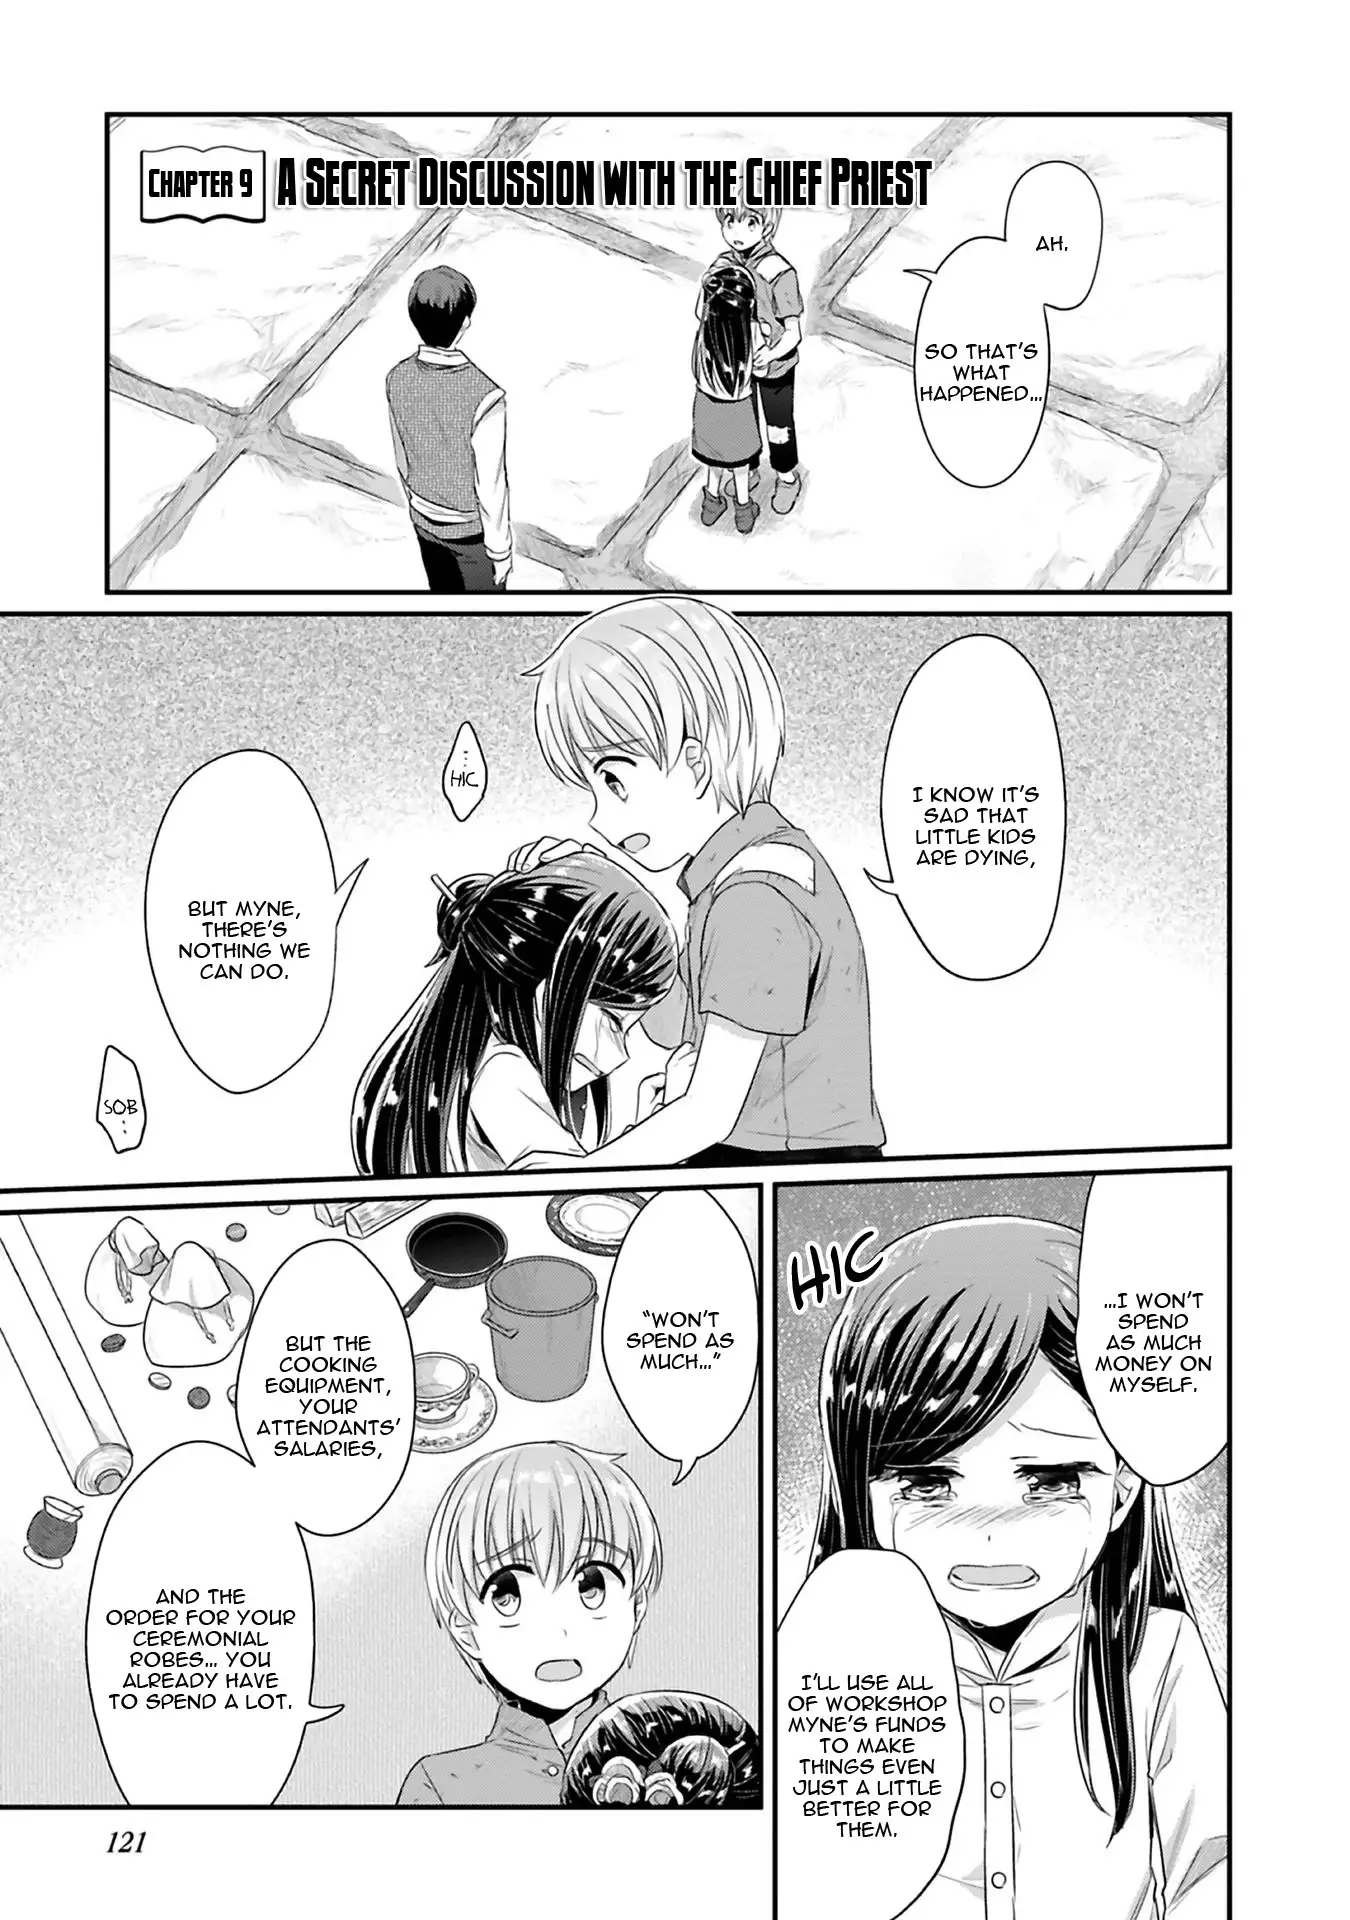 Domestic Girlfriend Discussion (Manga)